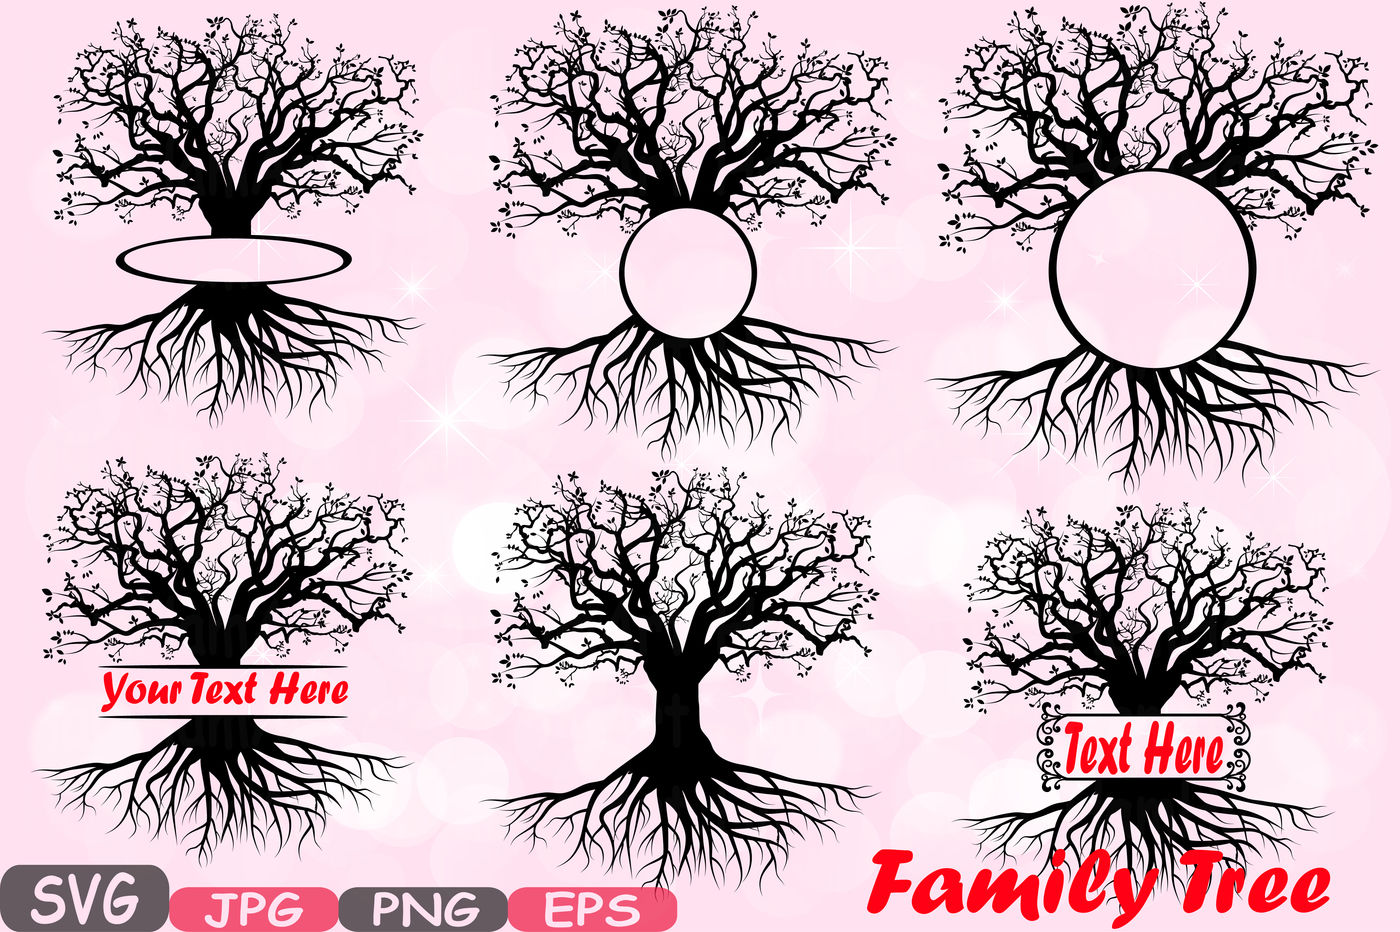 Family tree Split / Circle Silhouette SVG Cutting Files Family Tree